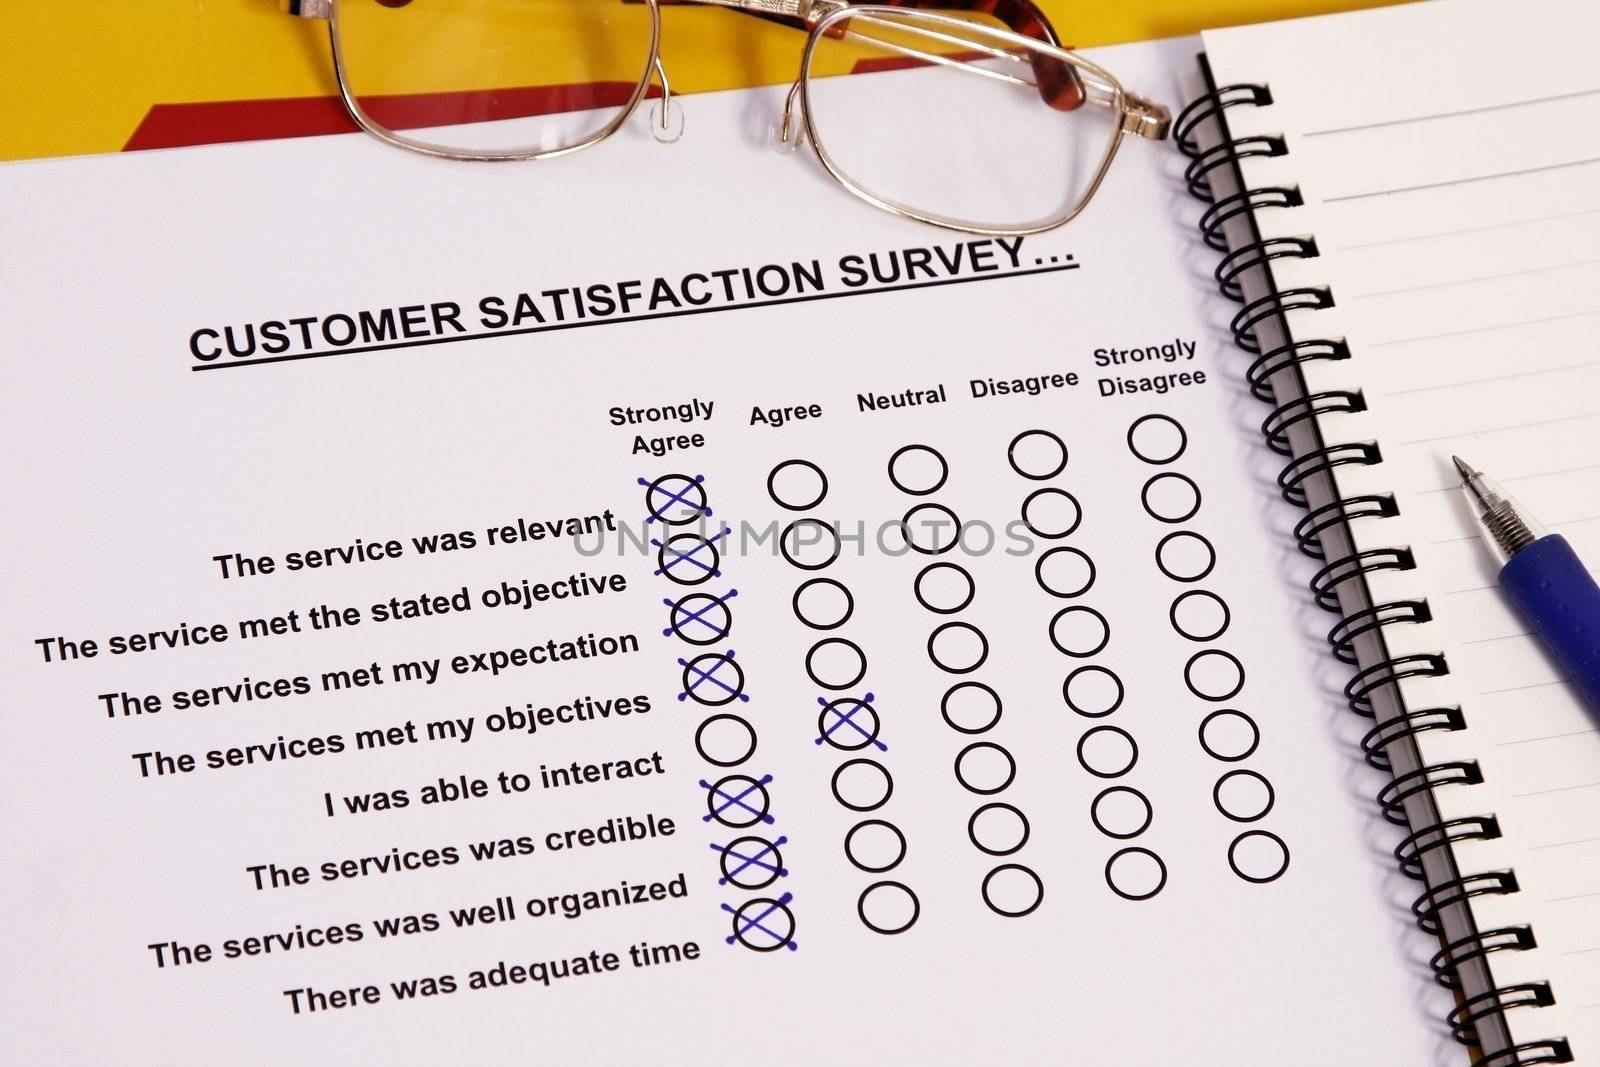 Customer Service survey by sacatani